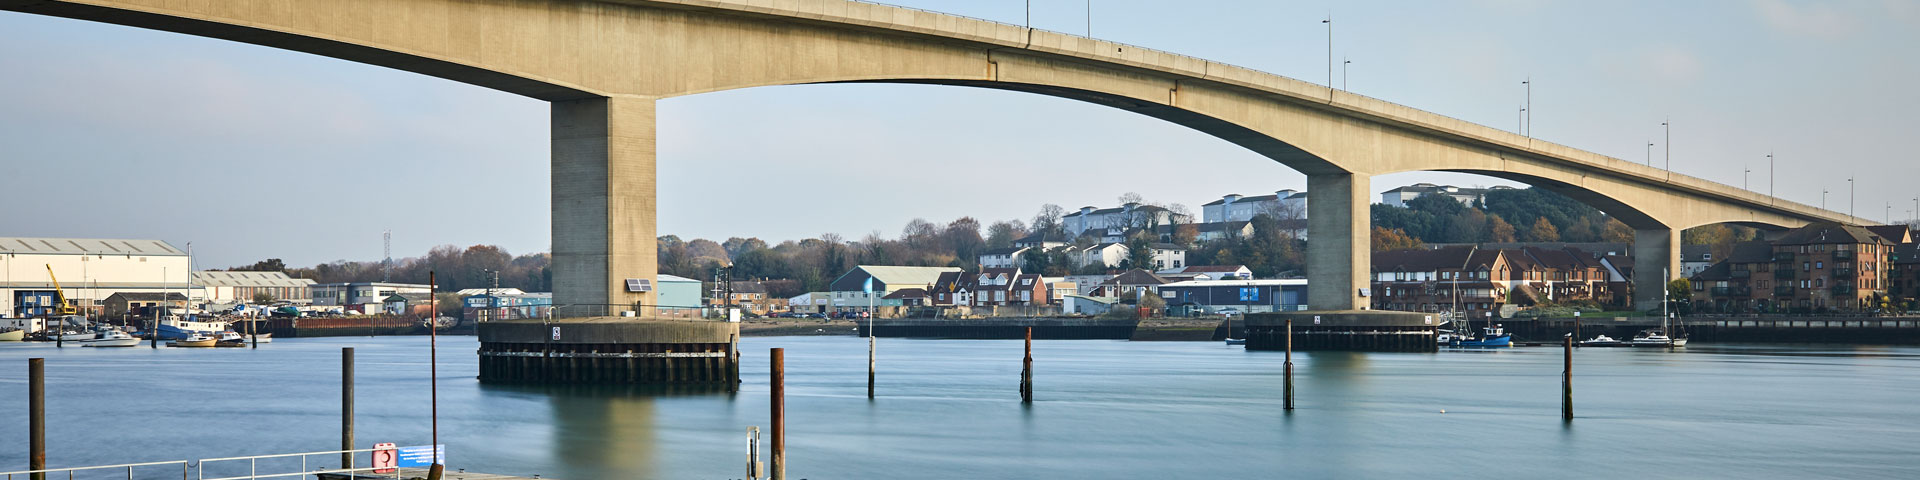 The Itchen Bridge in Southampton